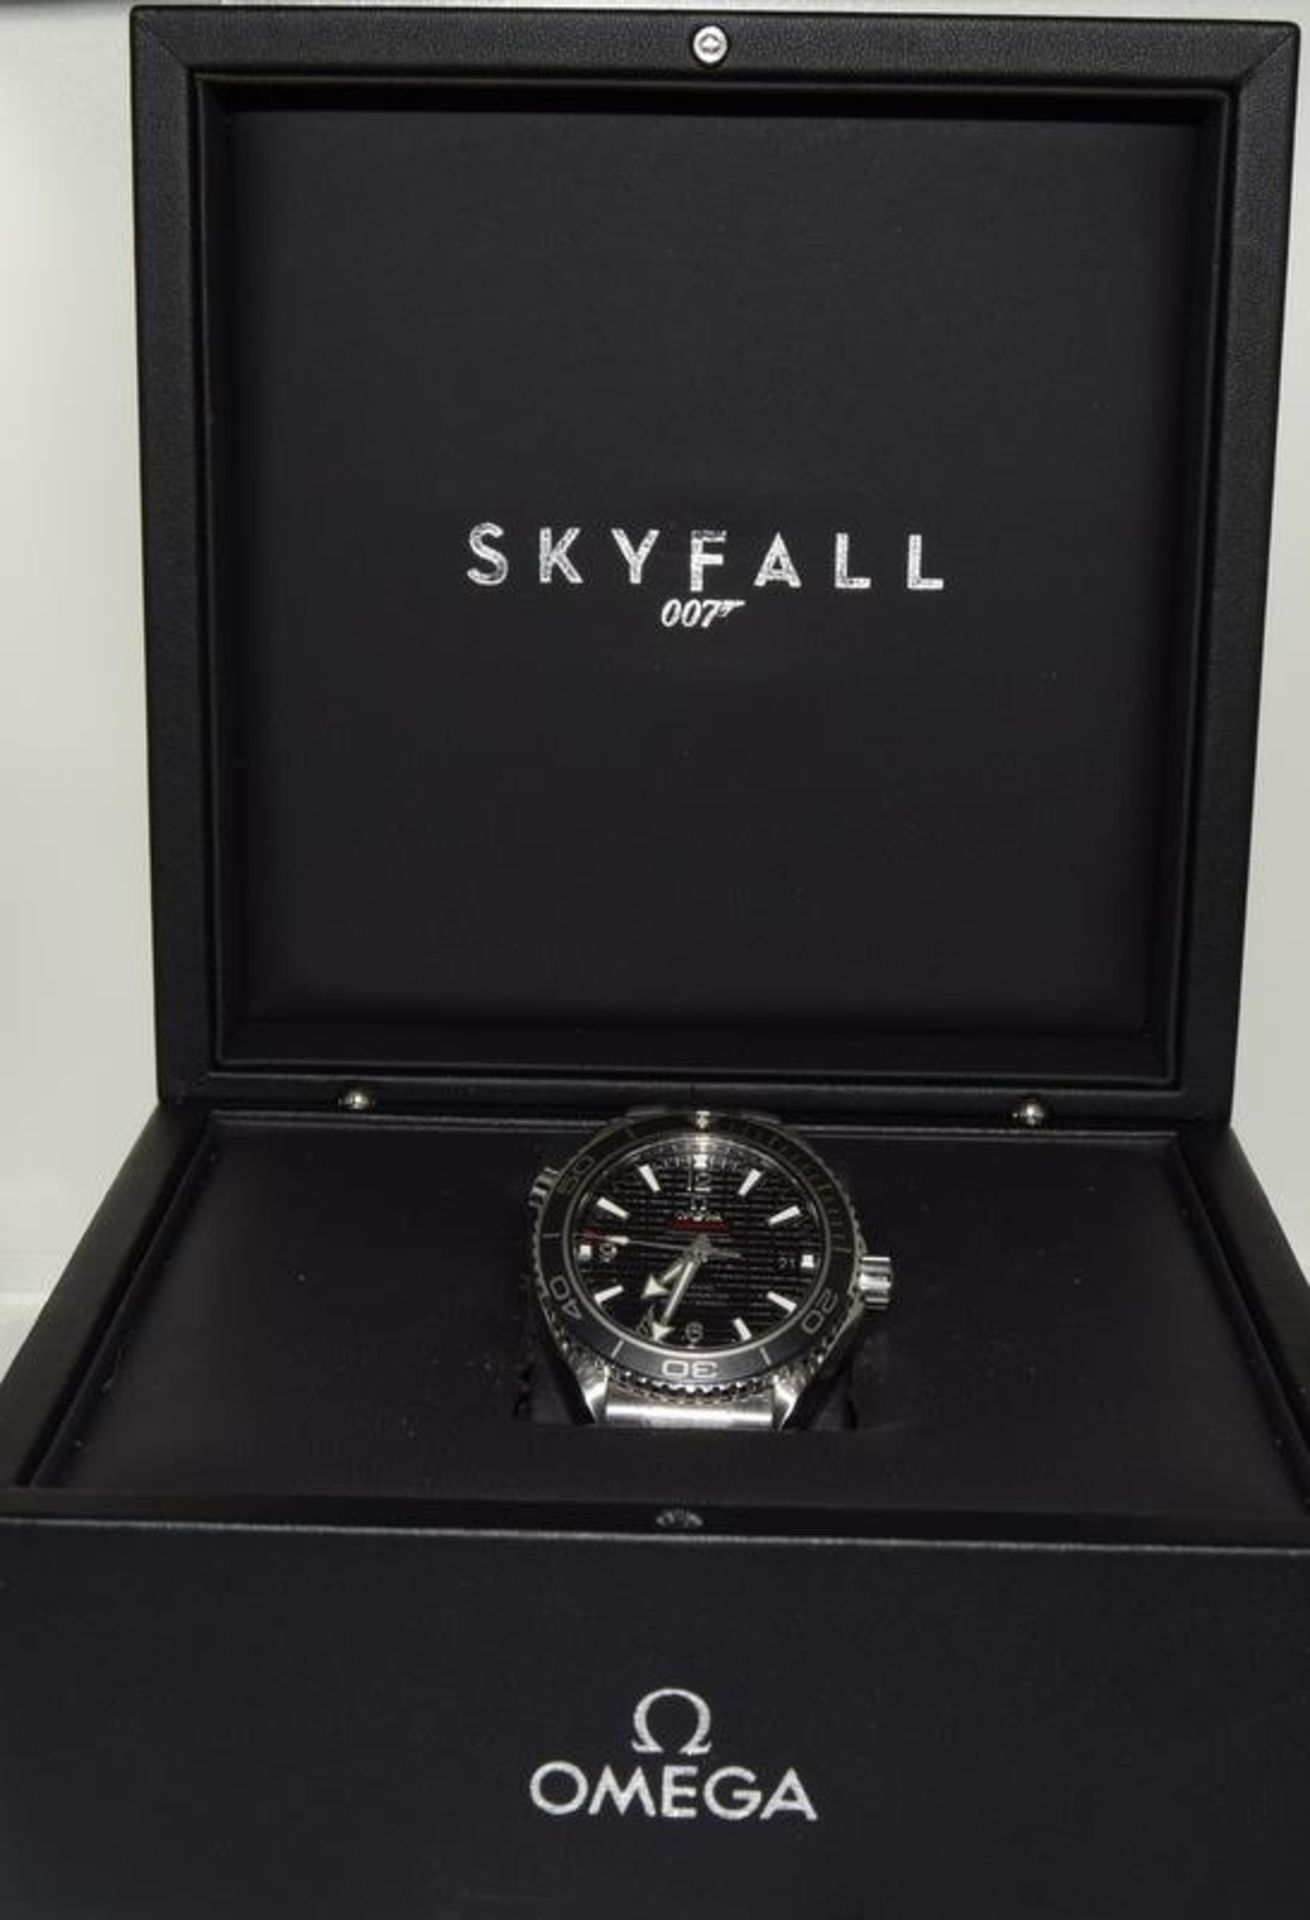 James Bond Skyfall Omega Planet Ocean Limited Edition 0778/5007 wrist watch, 42mm diameter, 2012 - Image 2 of 10